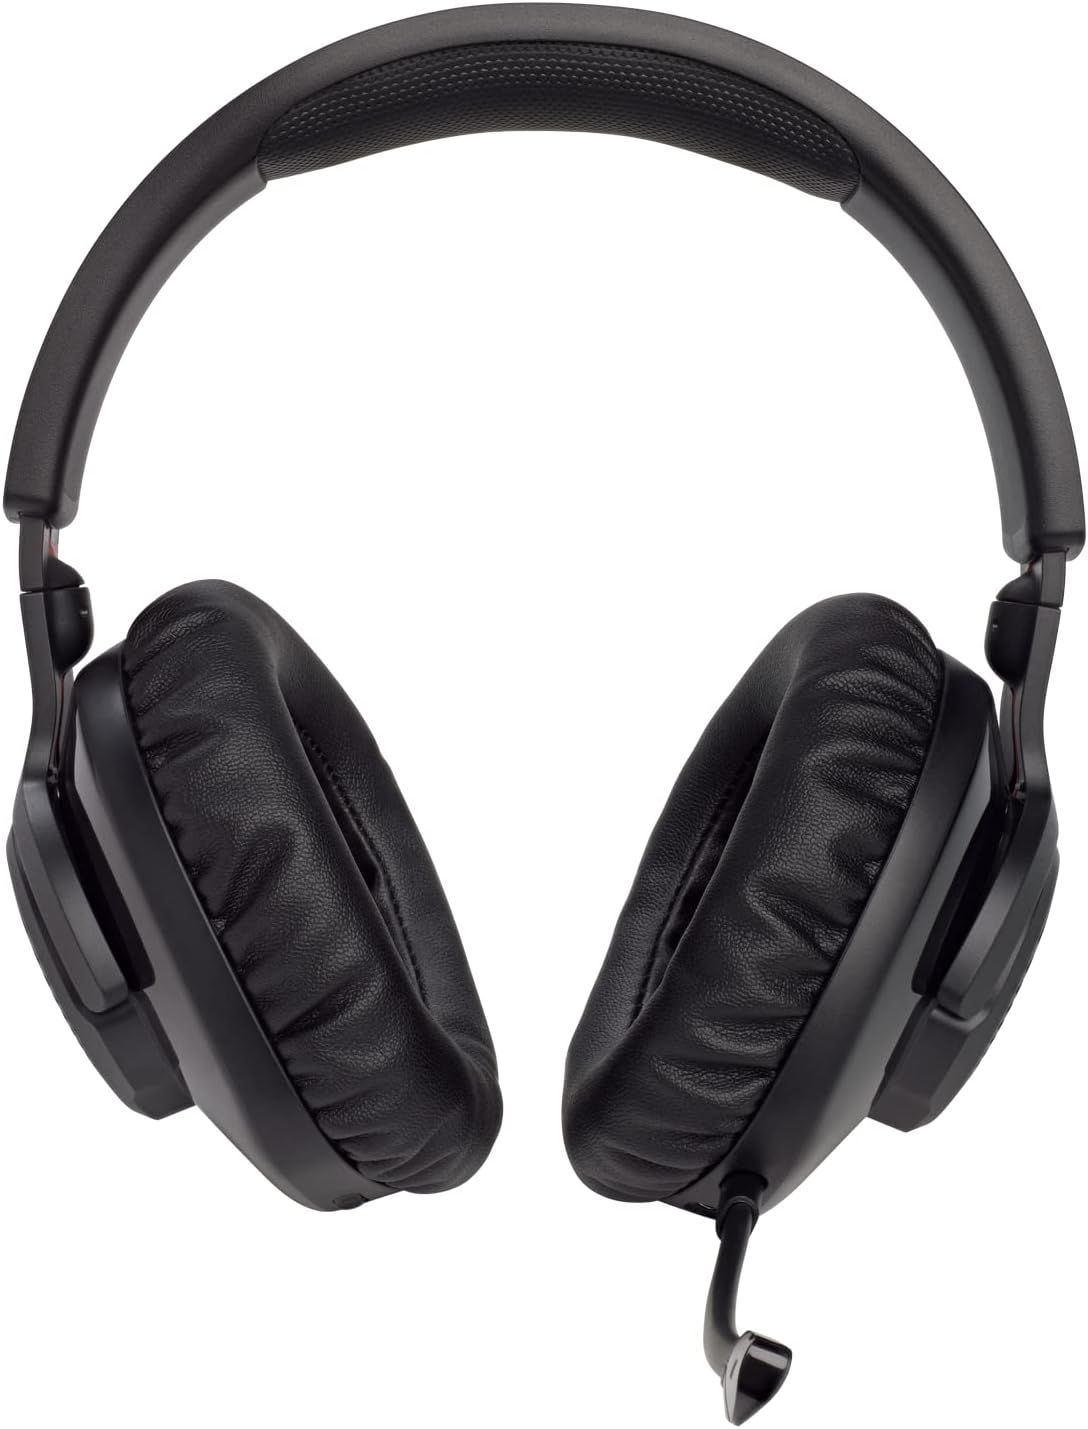 JBL Free WFH Wireless Over Ear Headphones 2.4 GHz 22 Hour Battery w/ Mic - Black (Certified Refurbished)